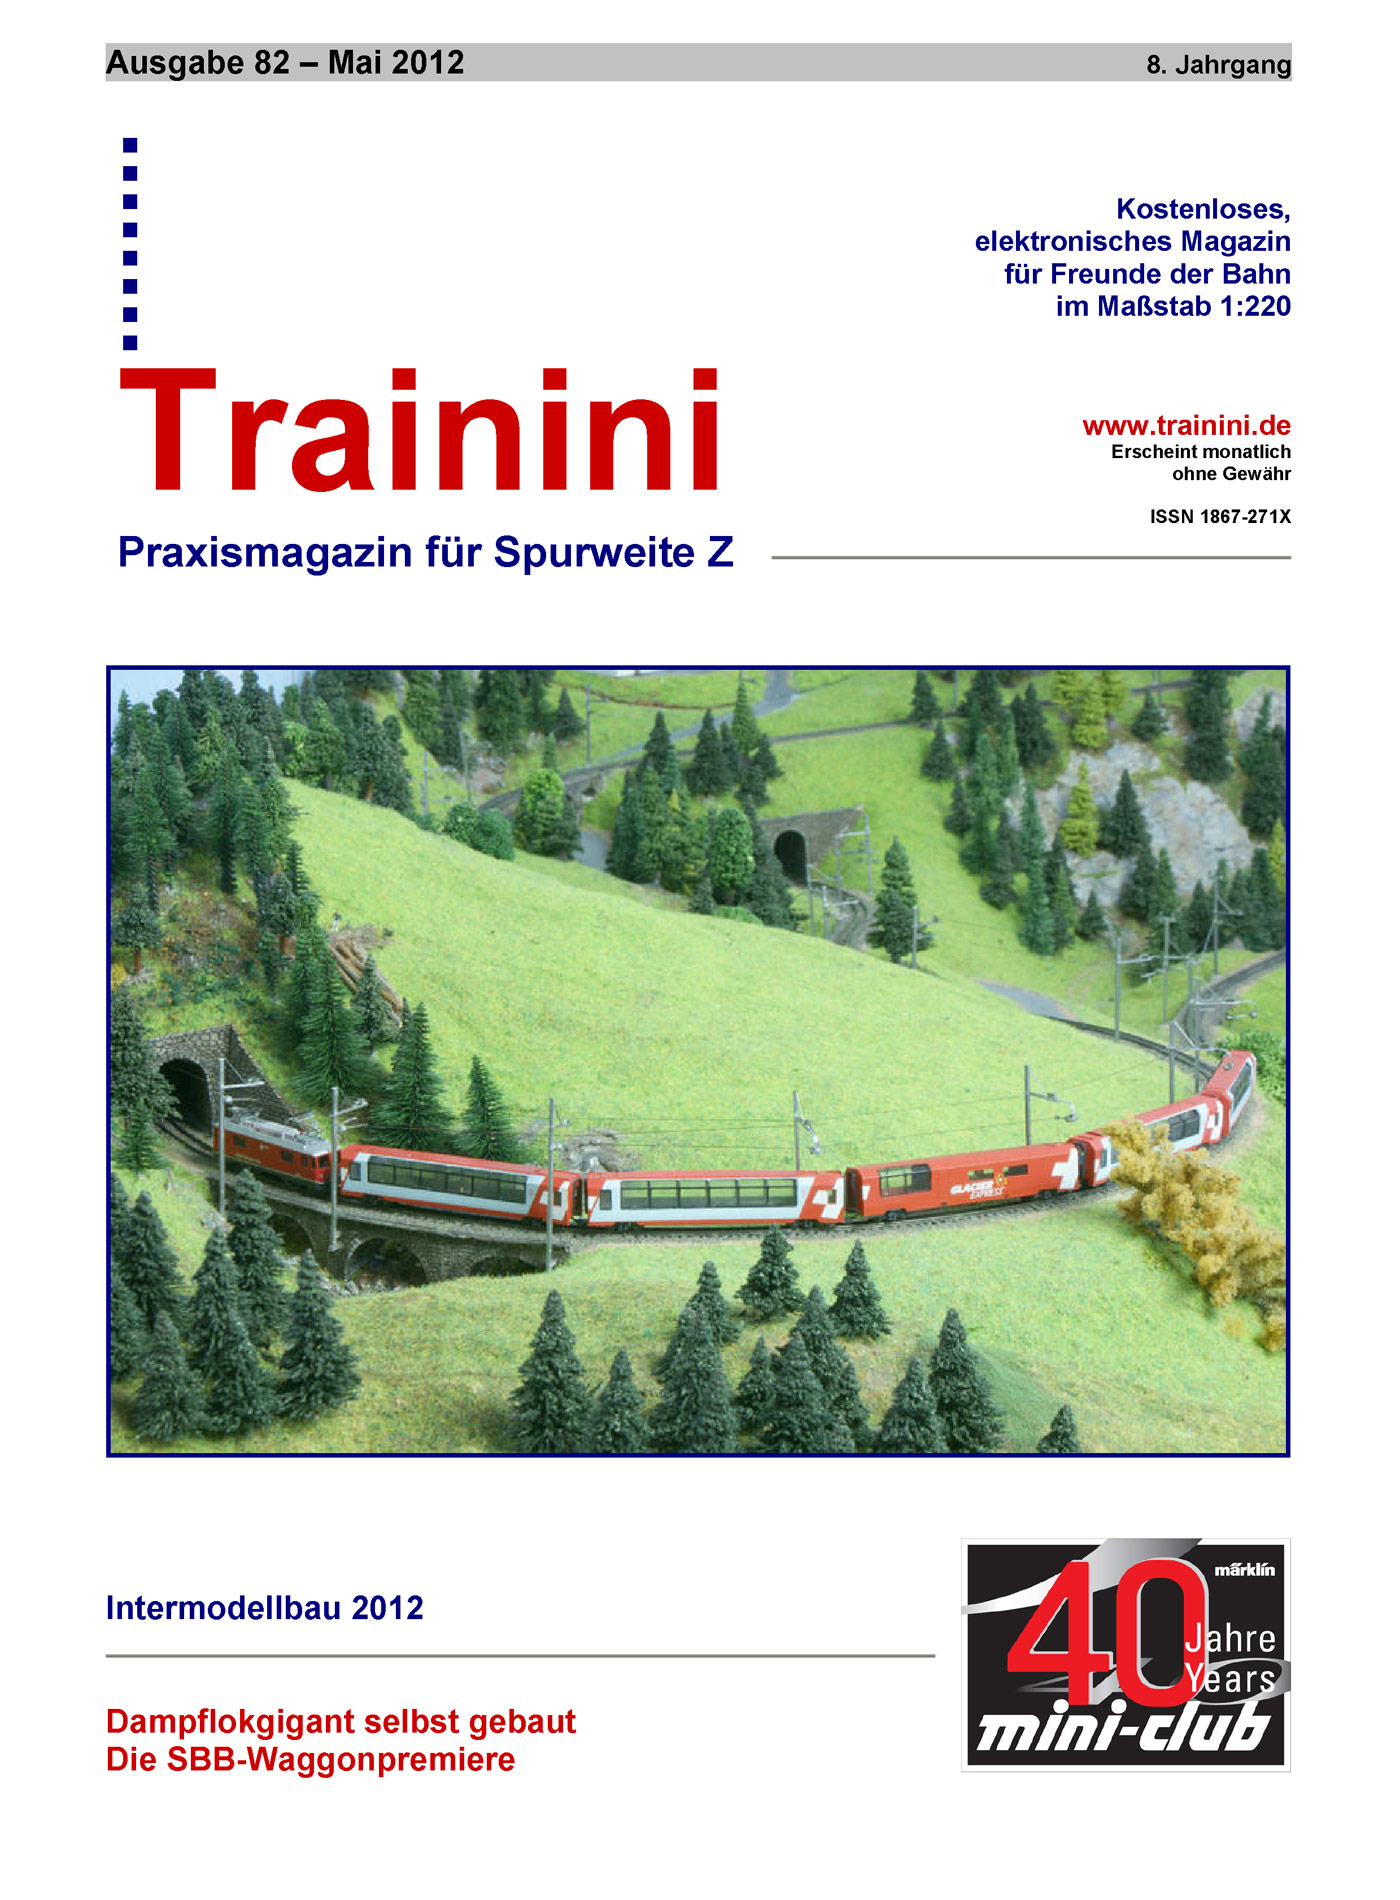 Trainini Ausgabe Mai 2012